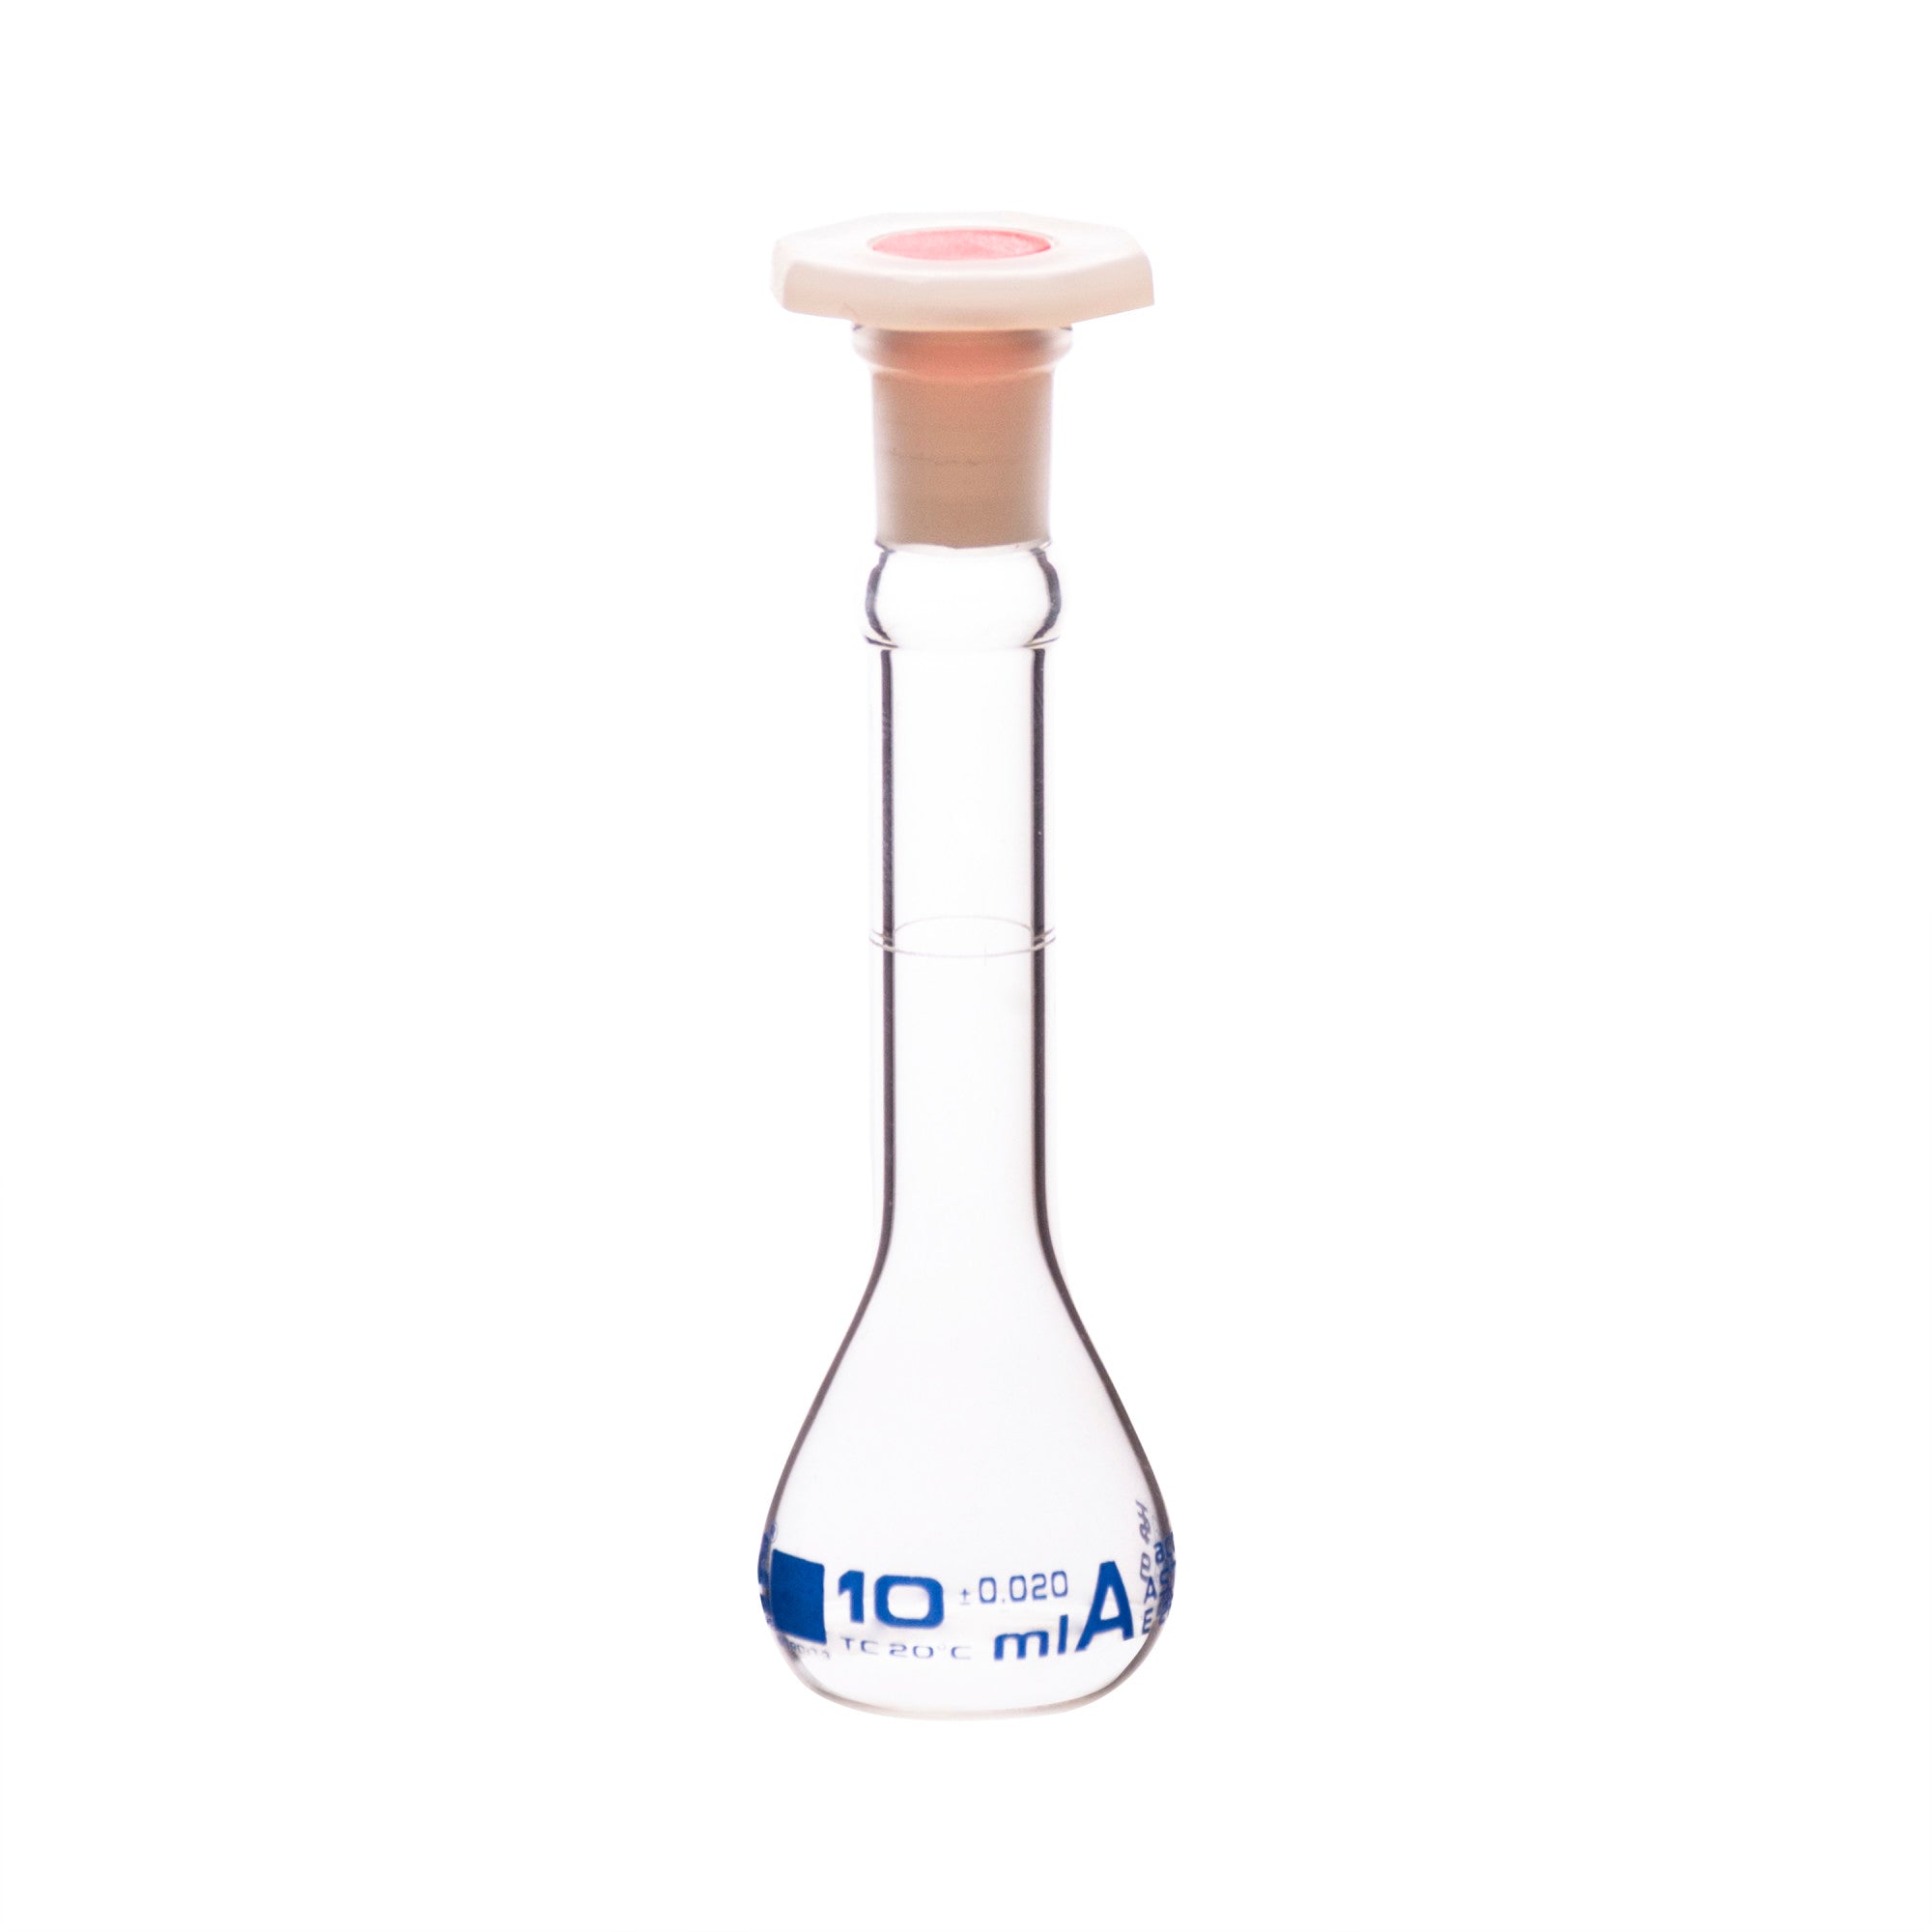 Borosilicate Volumetric Flask with Polyethylene Stopper, 10 ml, Class A, Blue Print, ASTM, Autoclavable